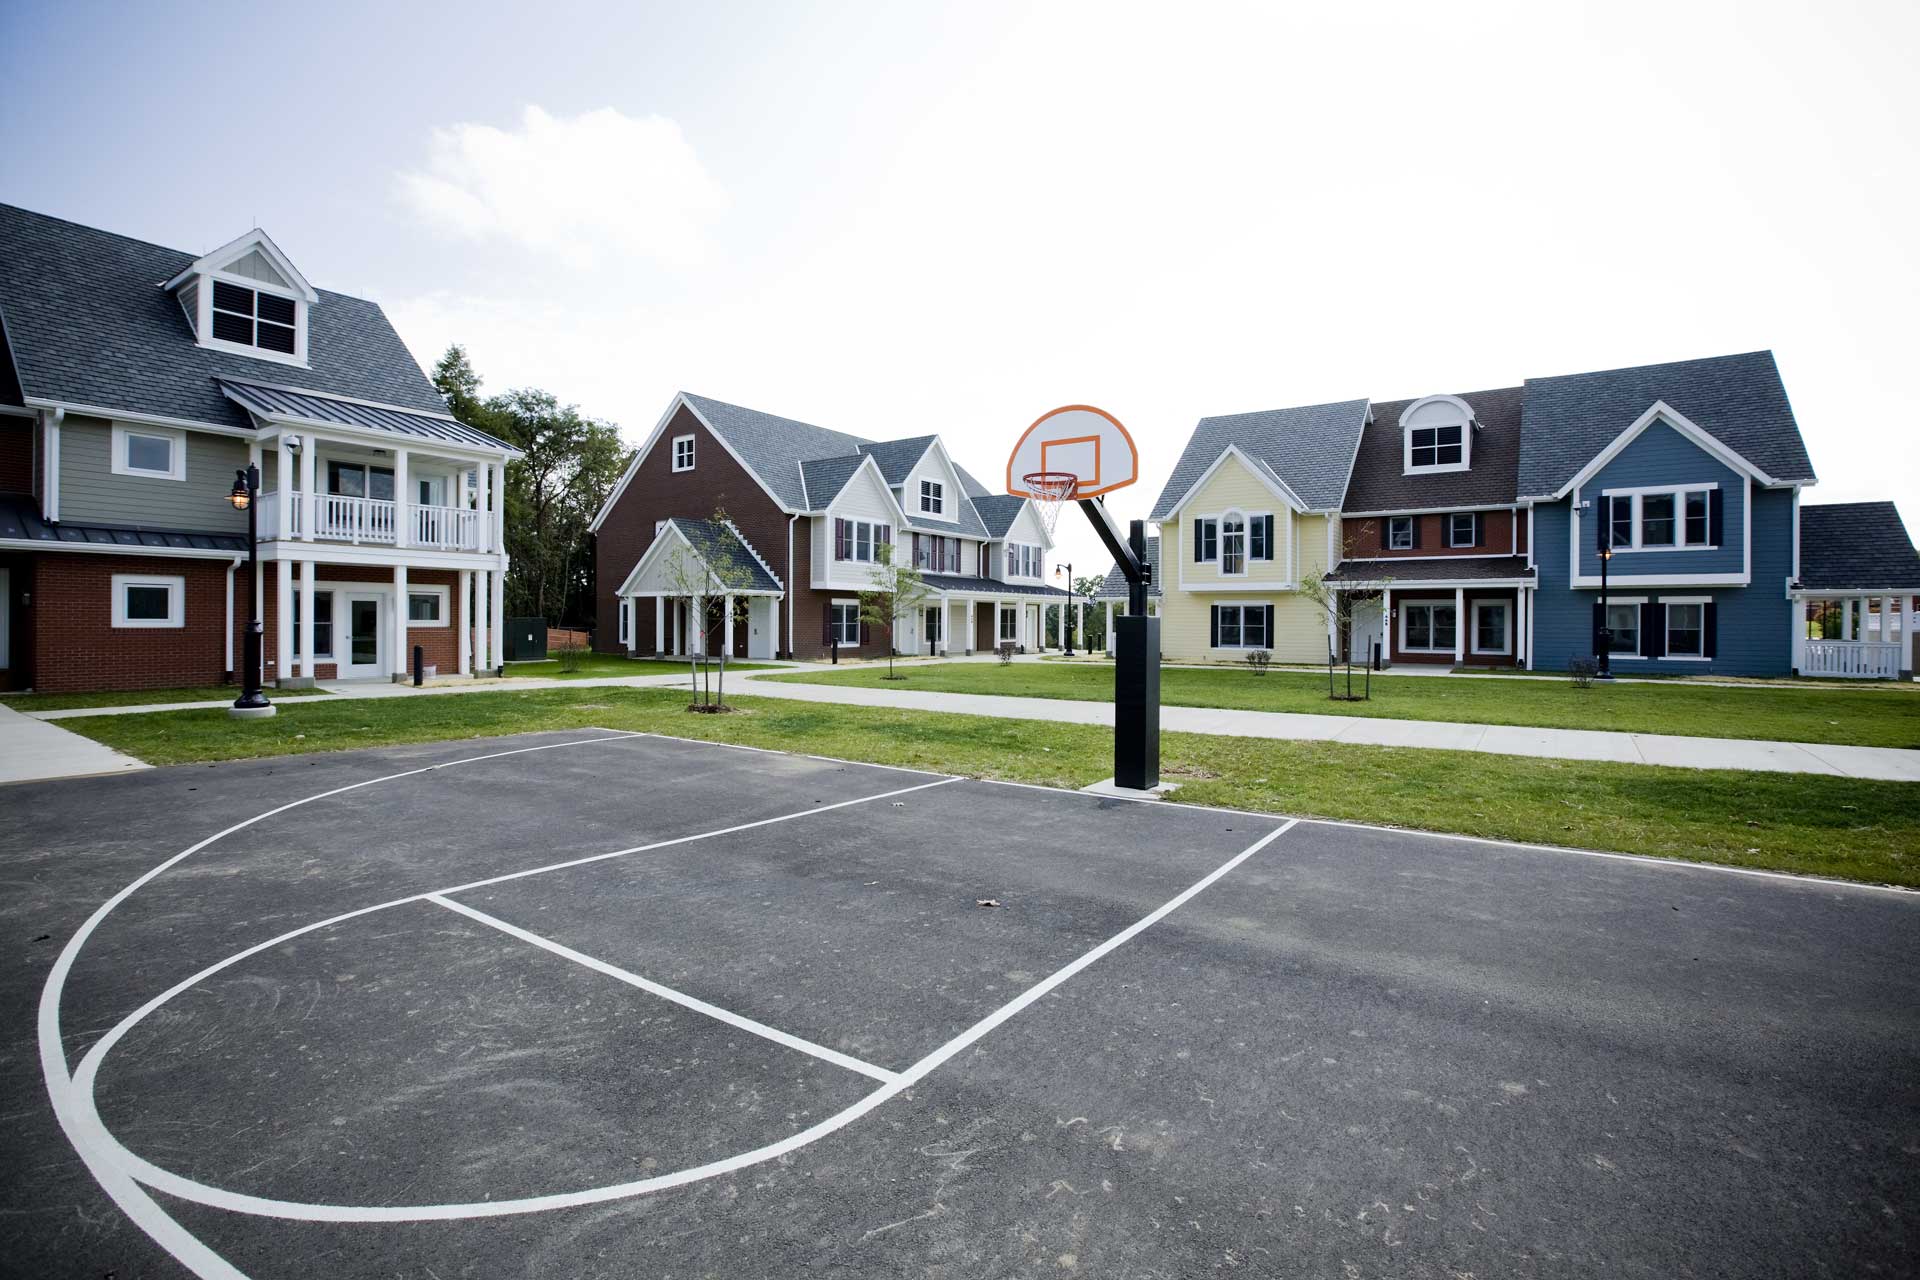 Image of basketball court in residential neighborhood